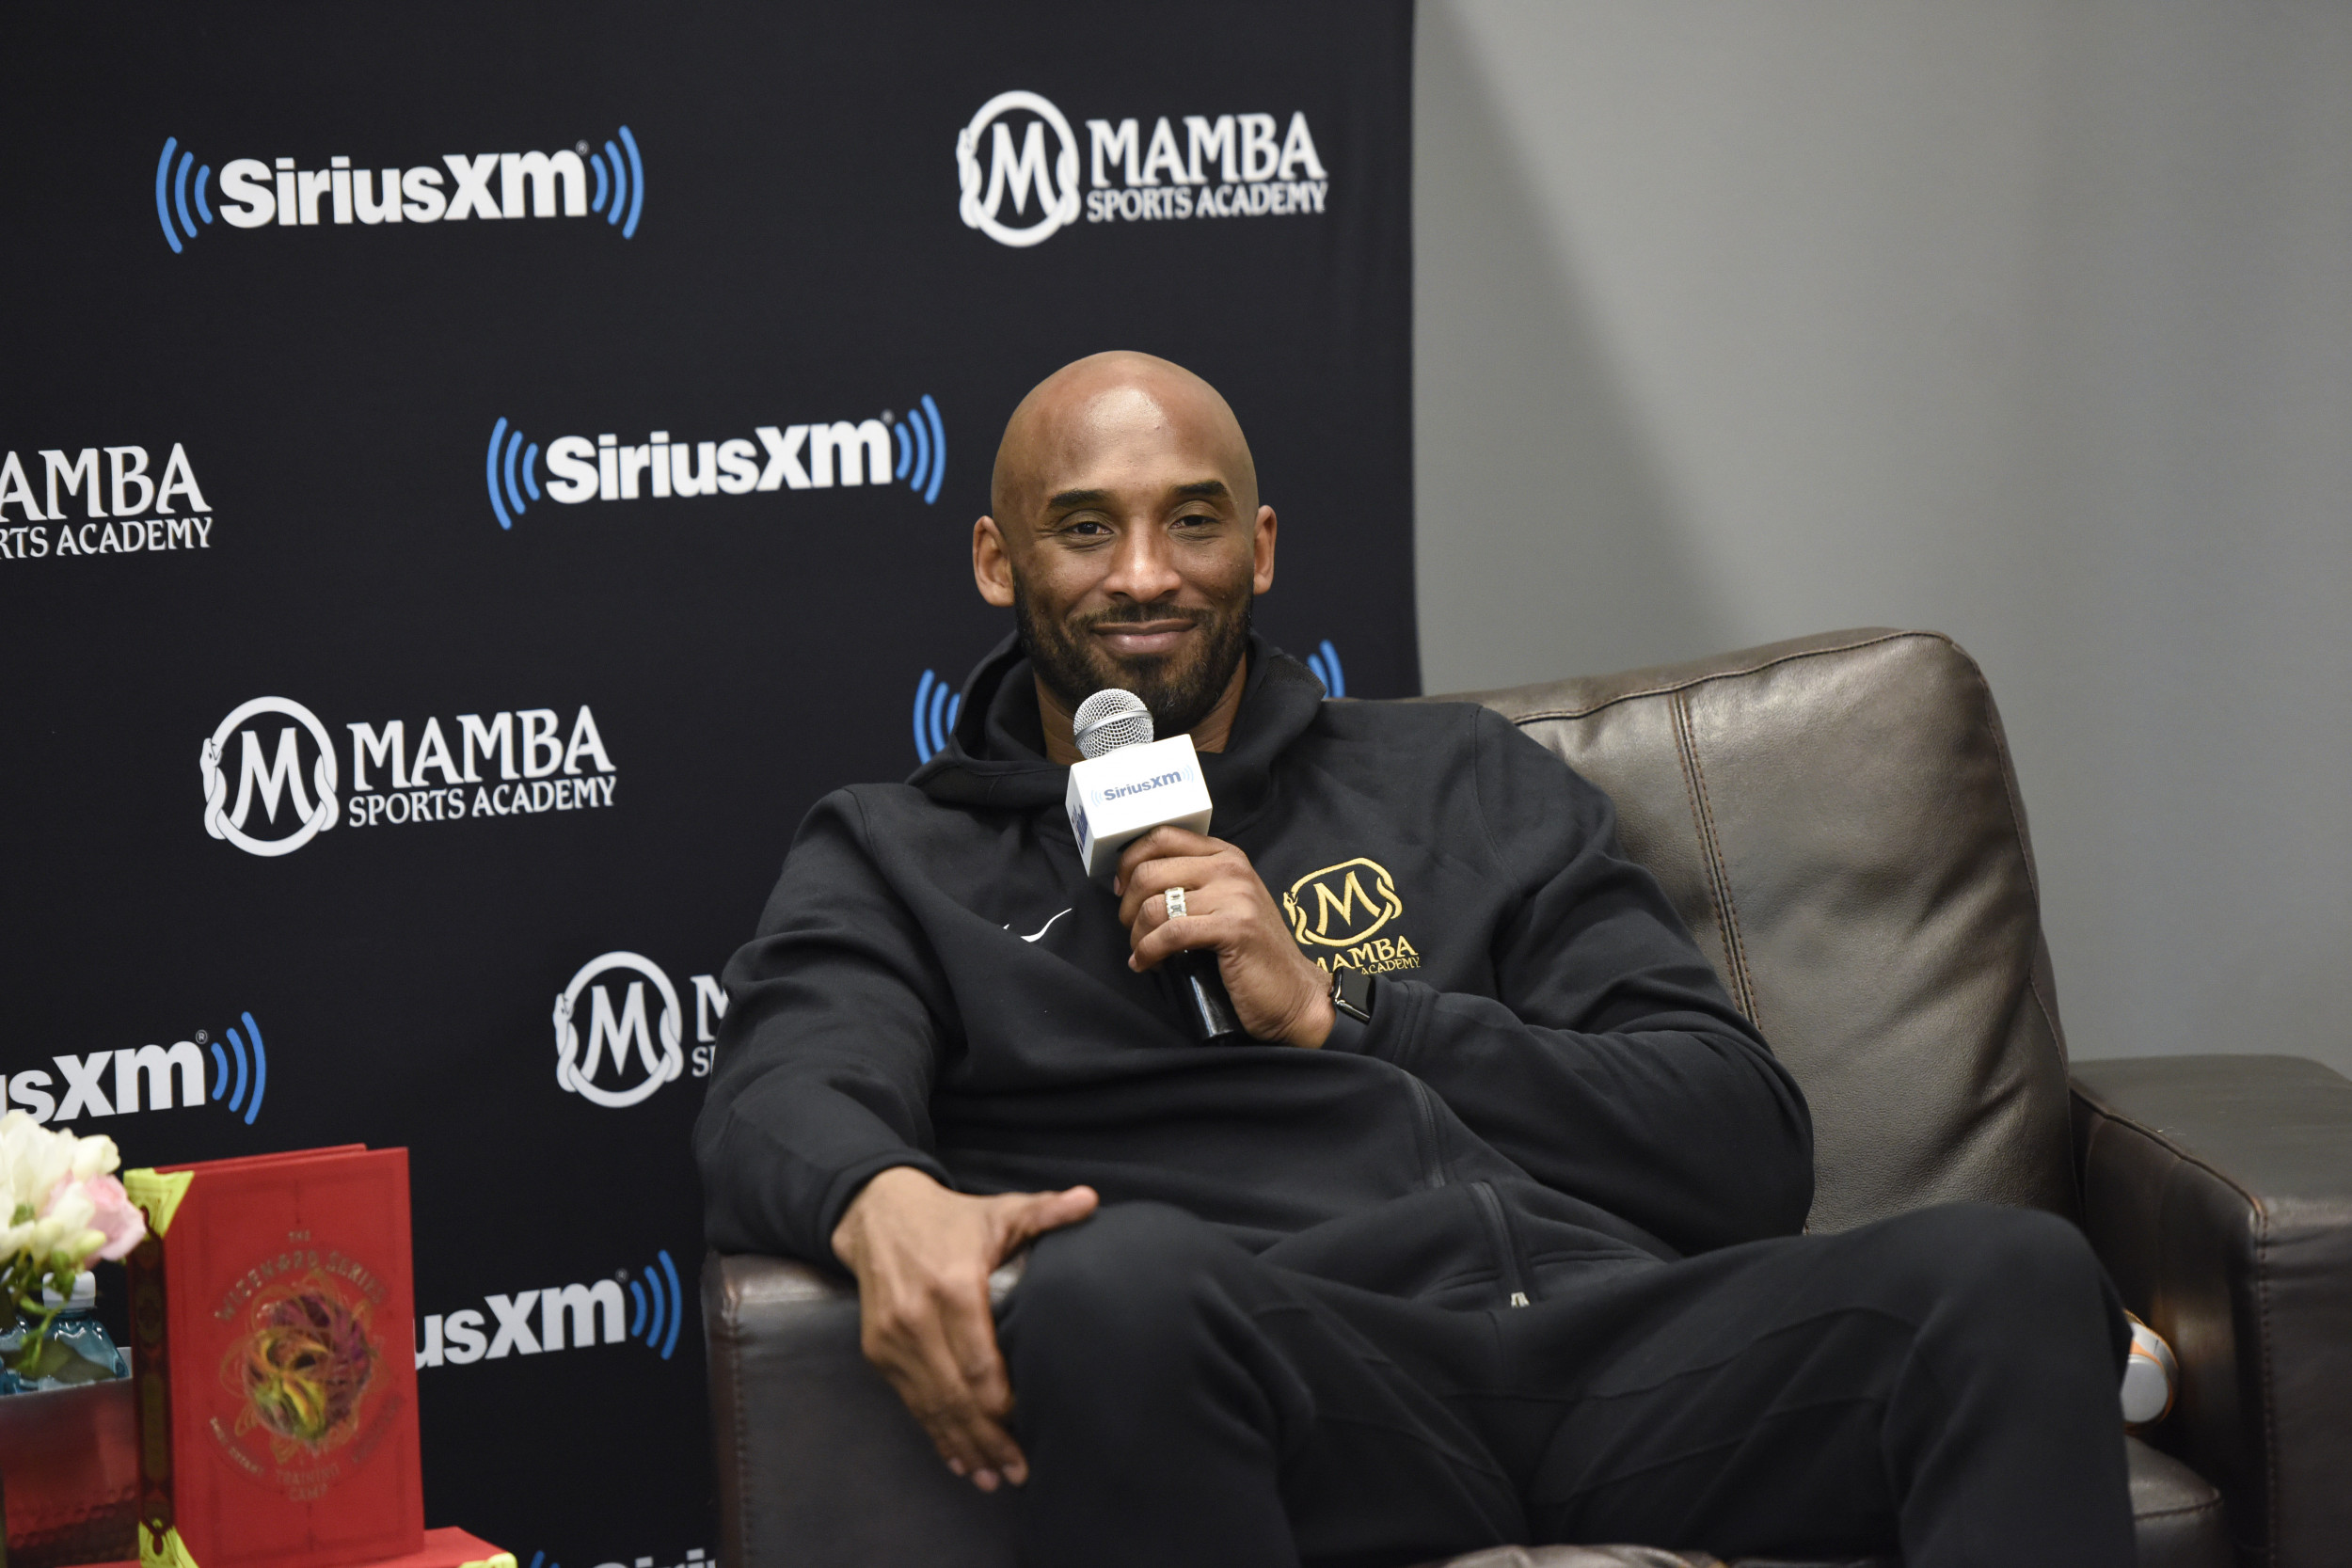 Observing Kobe Bryant: Fun Realities on His 45th Birthday